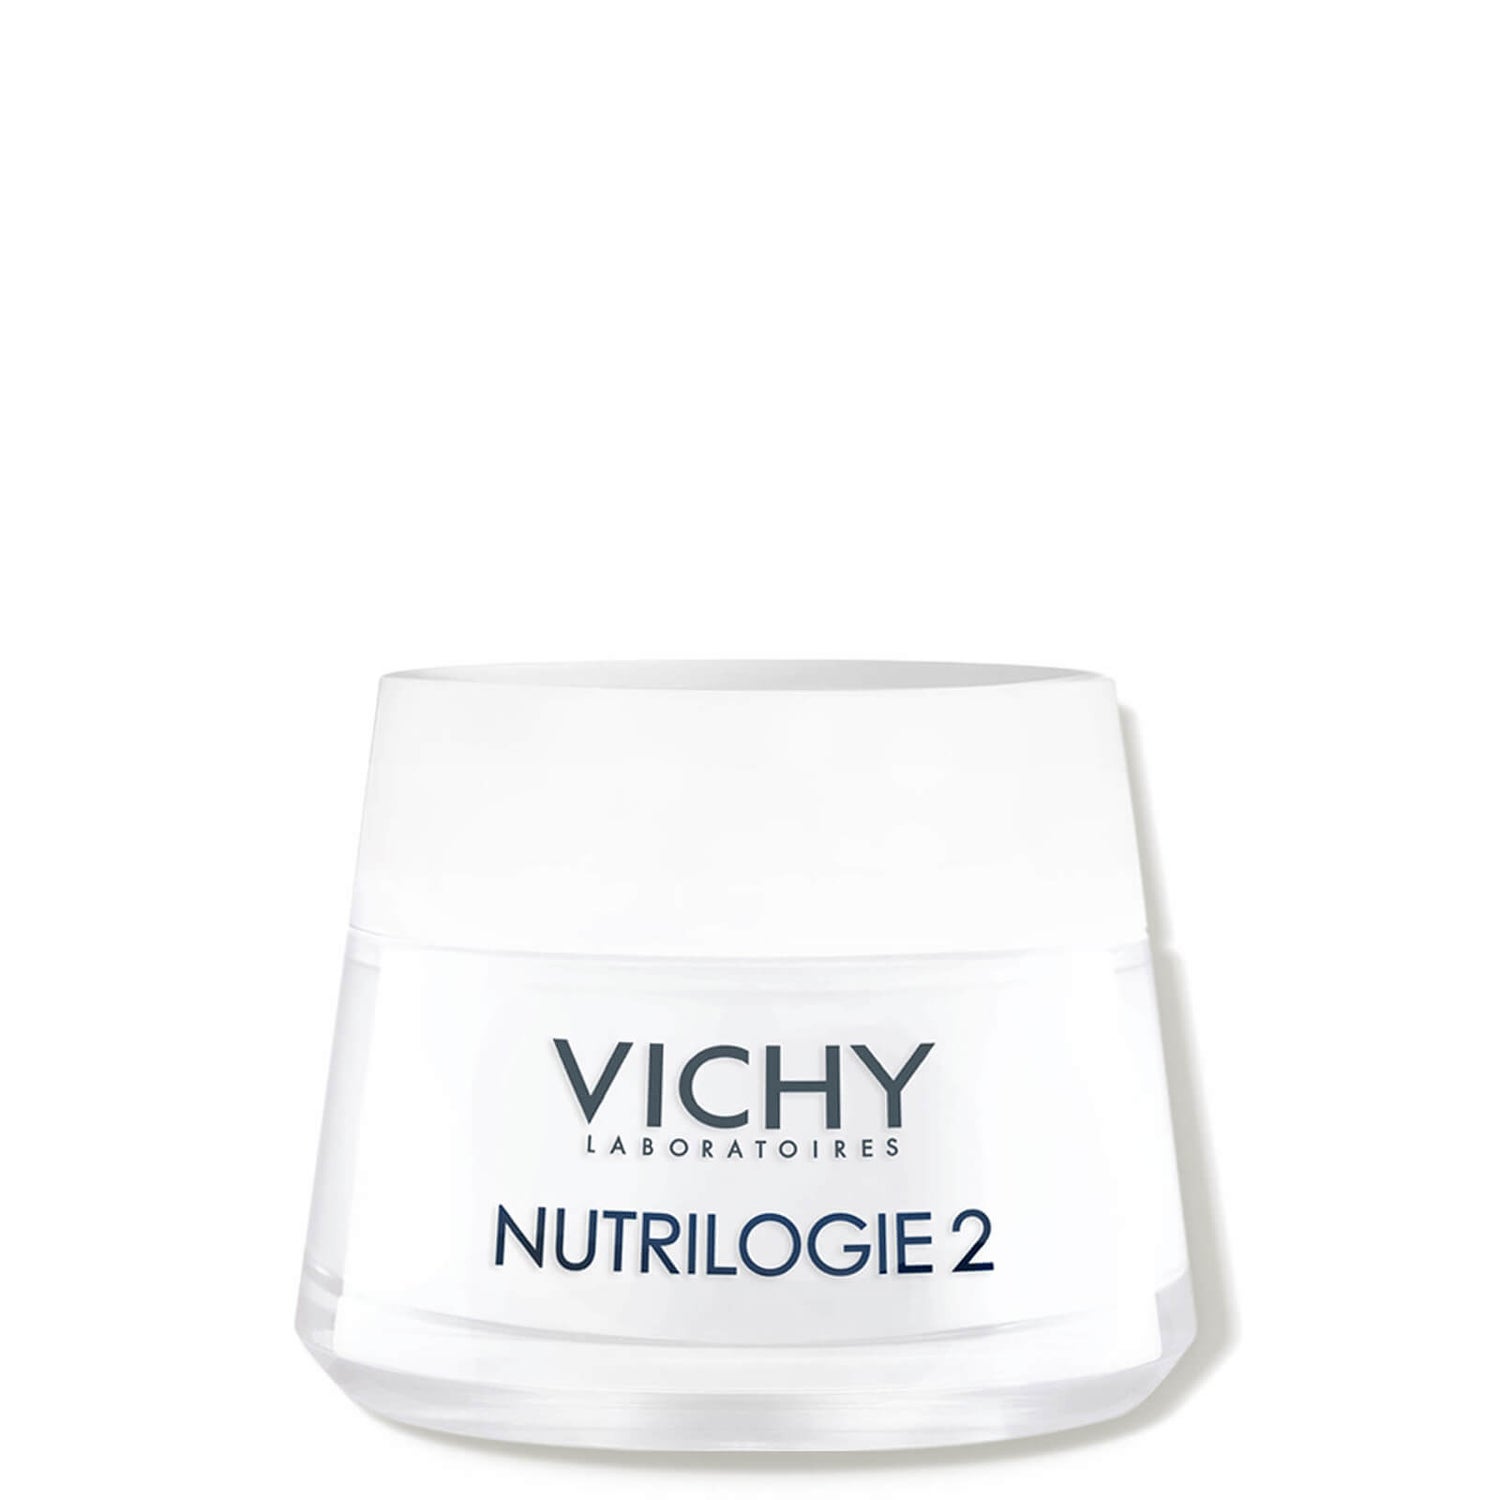 Vichy Nutrilogie 2 Intensive Nourishing Moisturizer Cream (1.69 fl. oz.)